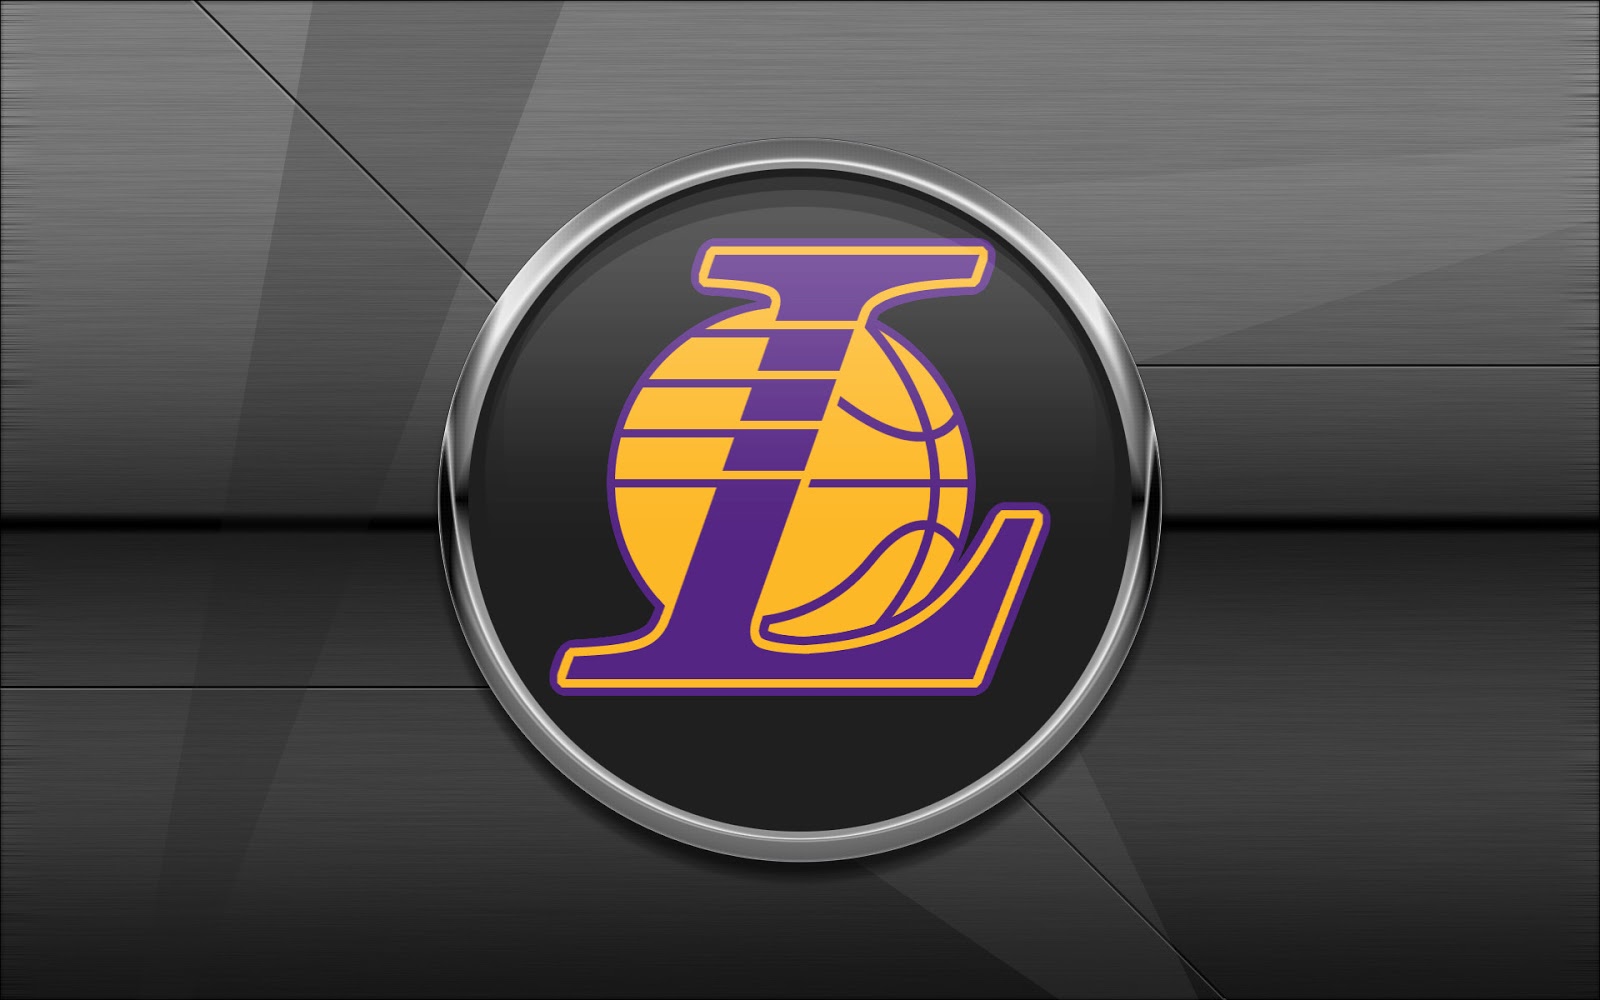 http://2.bp.blogspot.com/-yj7_Kl0ibCY/UOqyOu2SdfI/AAAAAAAAcvA/6c98EmRNmFY/s1600/La+Lakers+Basketball+Club+Logo+Wallpaper+2013+06.jpg